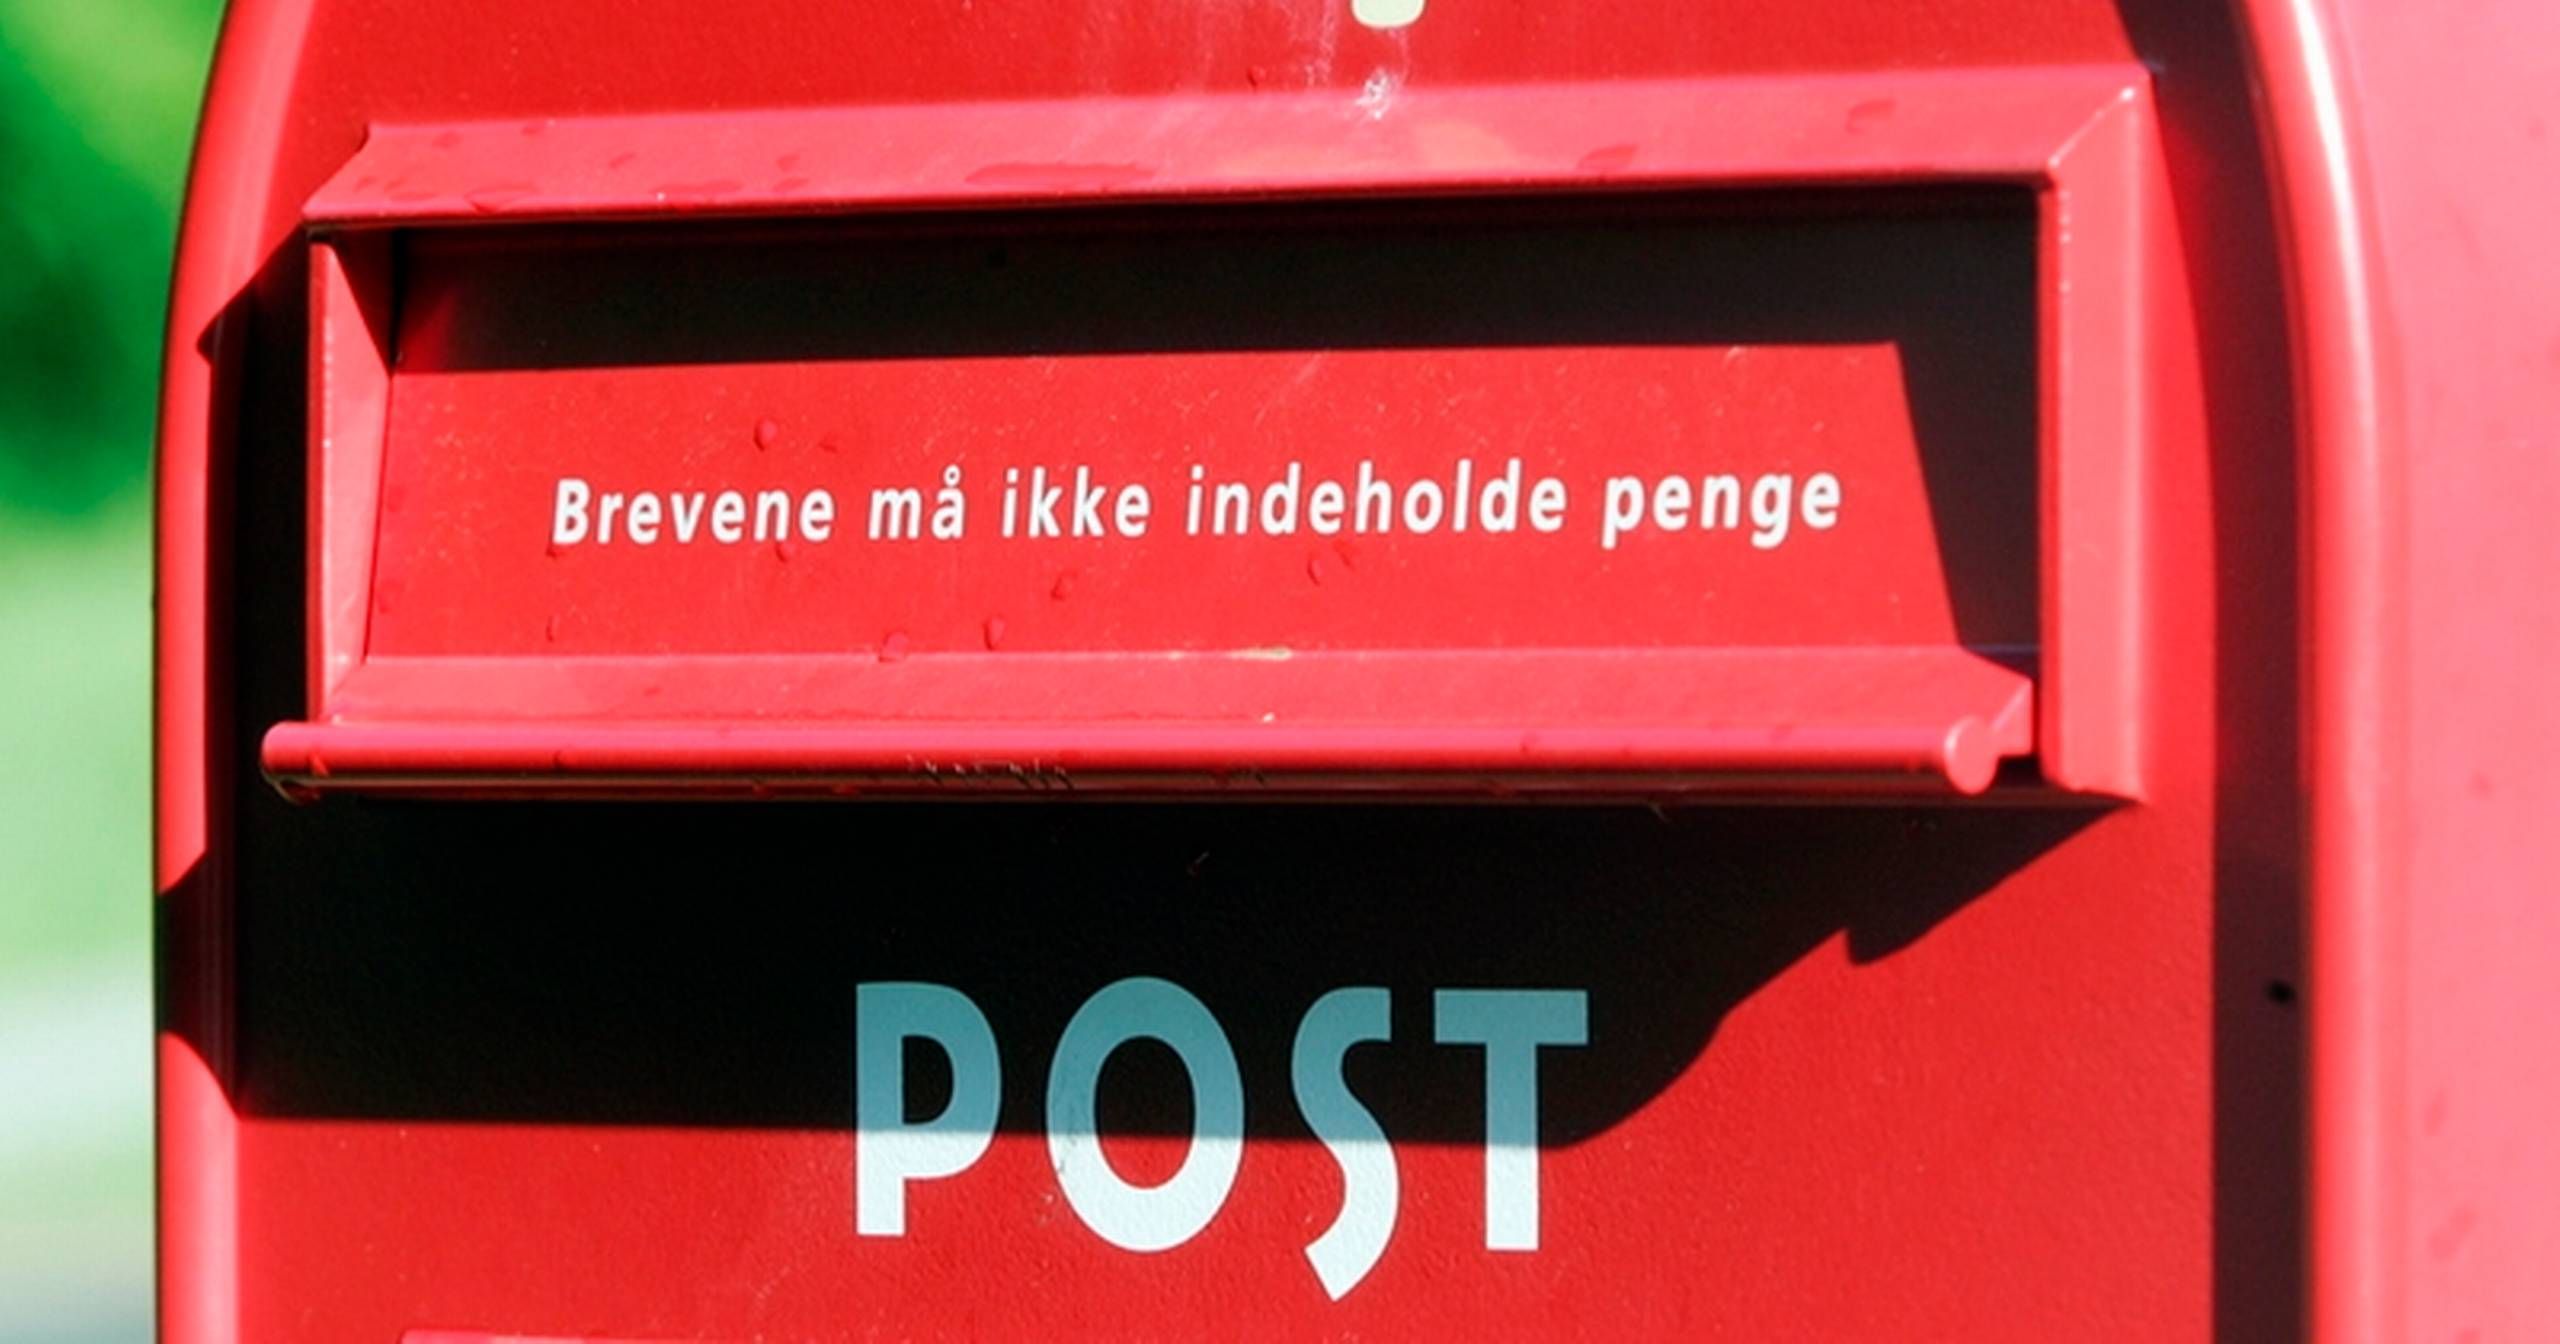 Postkasser tømmes fortsat seks gange om